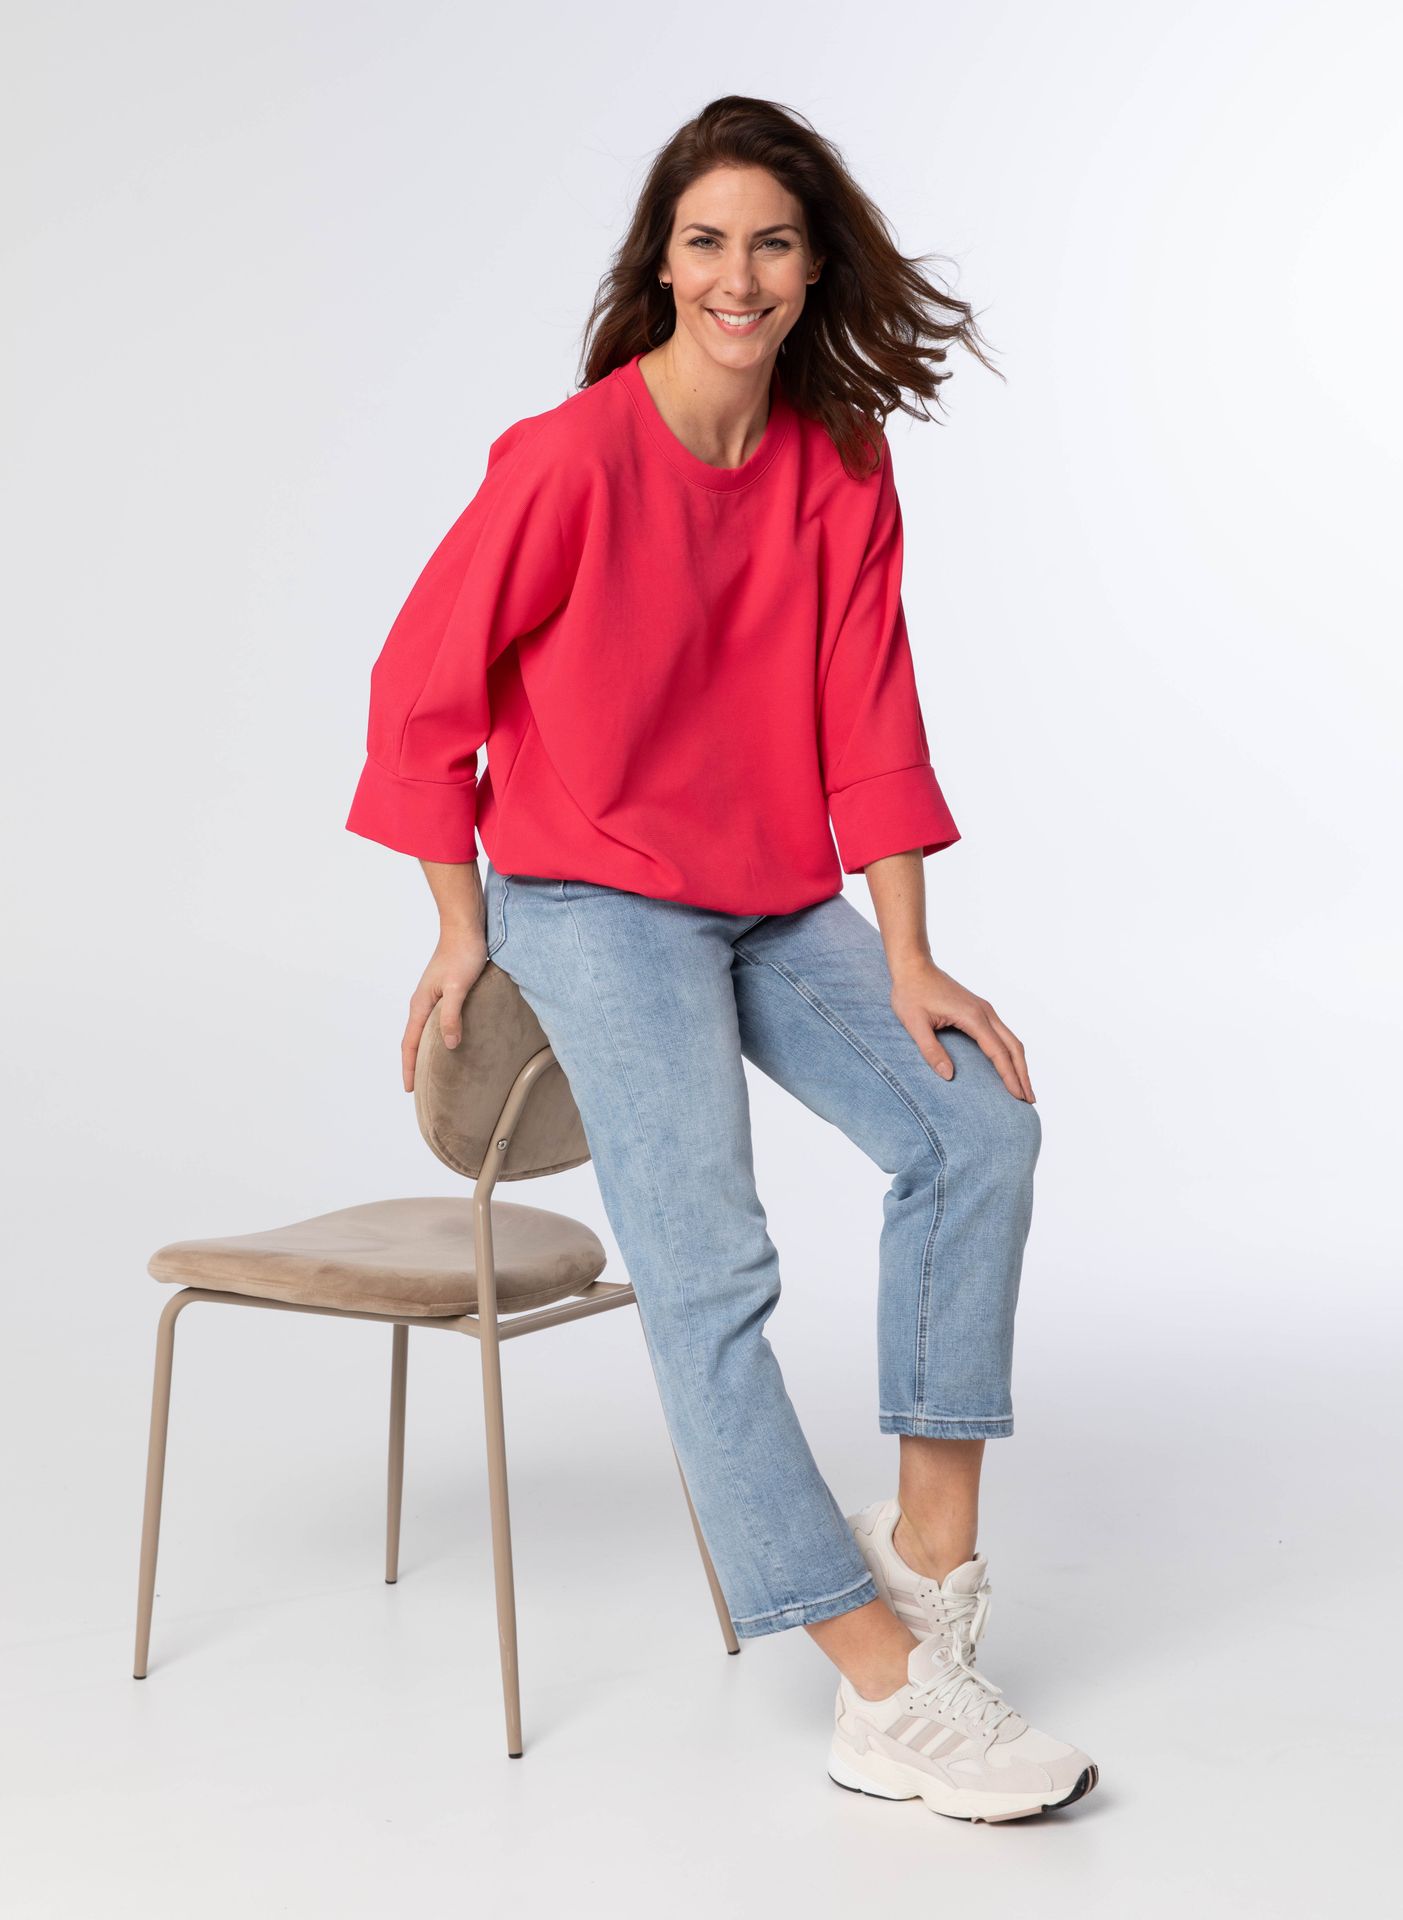 Norah Roze trui met driekwart mouwen fuchsia 213938-953